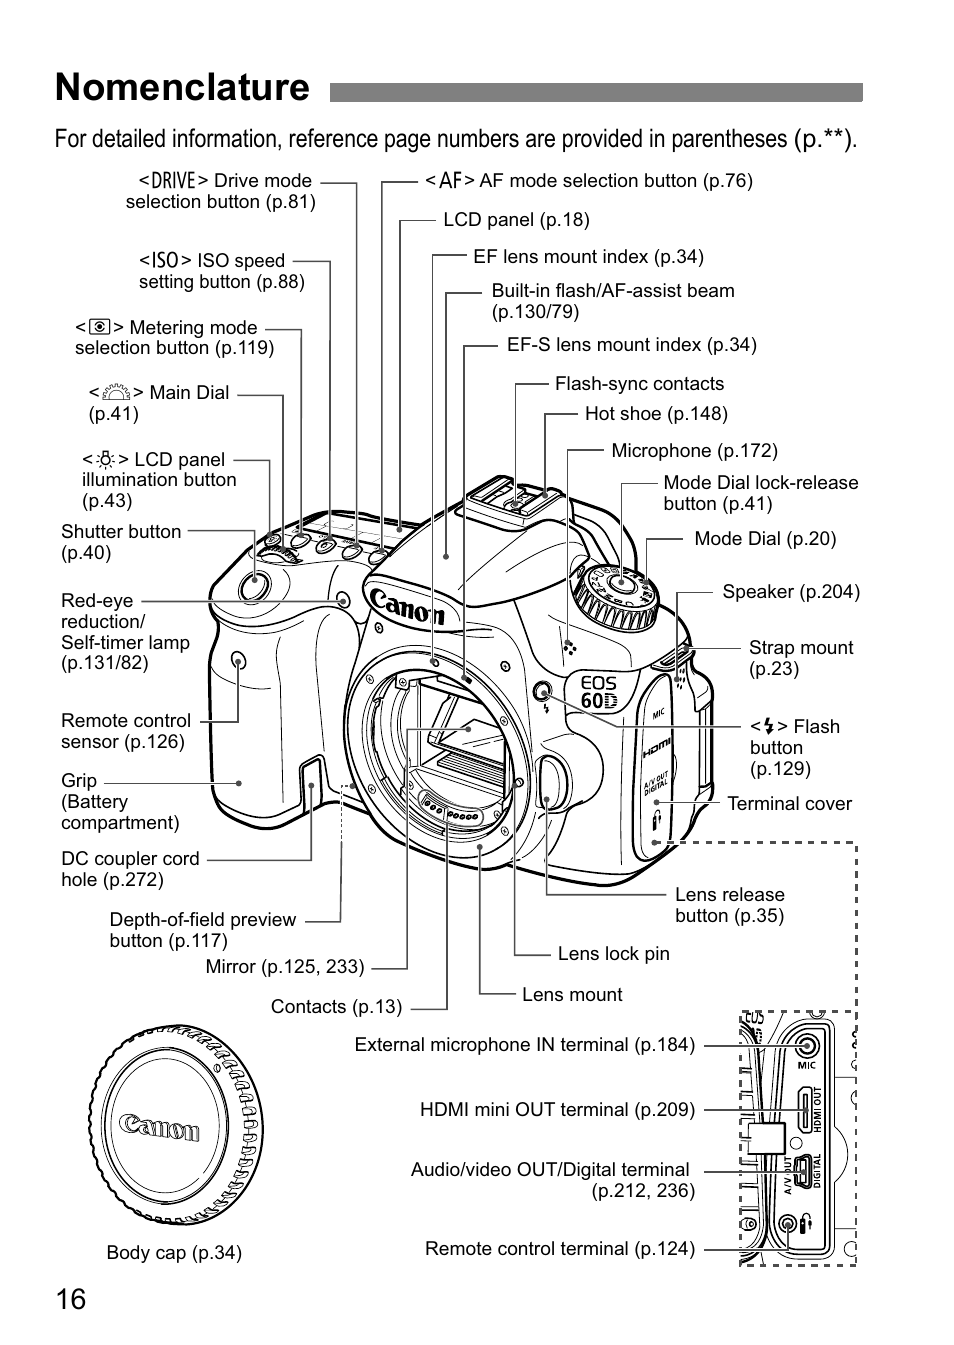 Nomenclature | Canon EOS 60D User Manual | Page 16 / 320 | Original mode